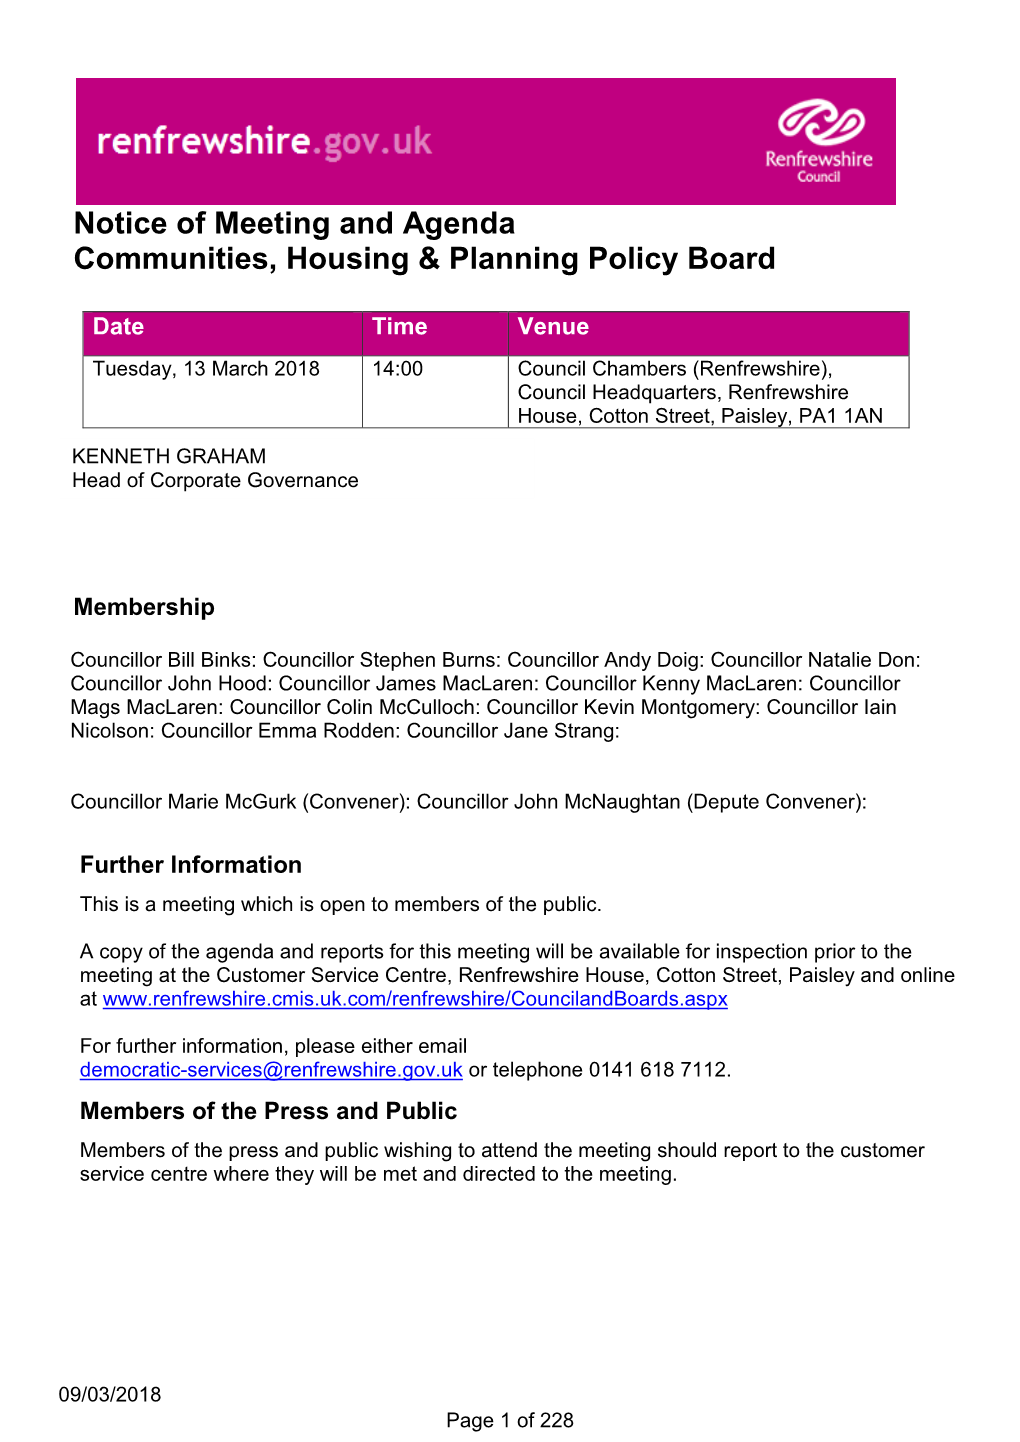 Notice of Meeting and Agenda Communities, Housing & Planning